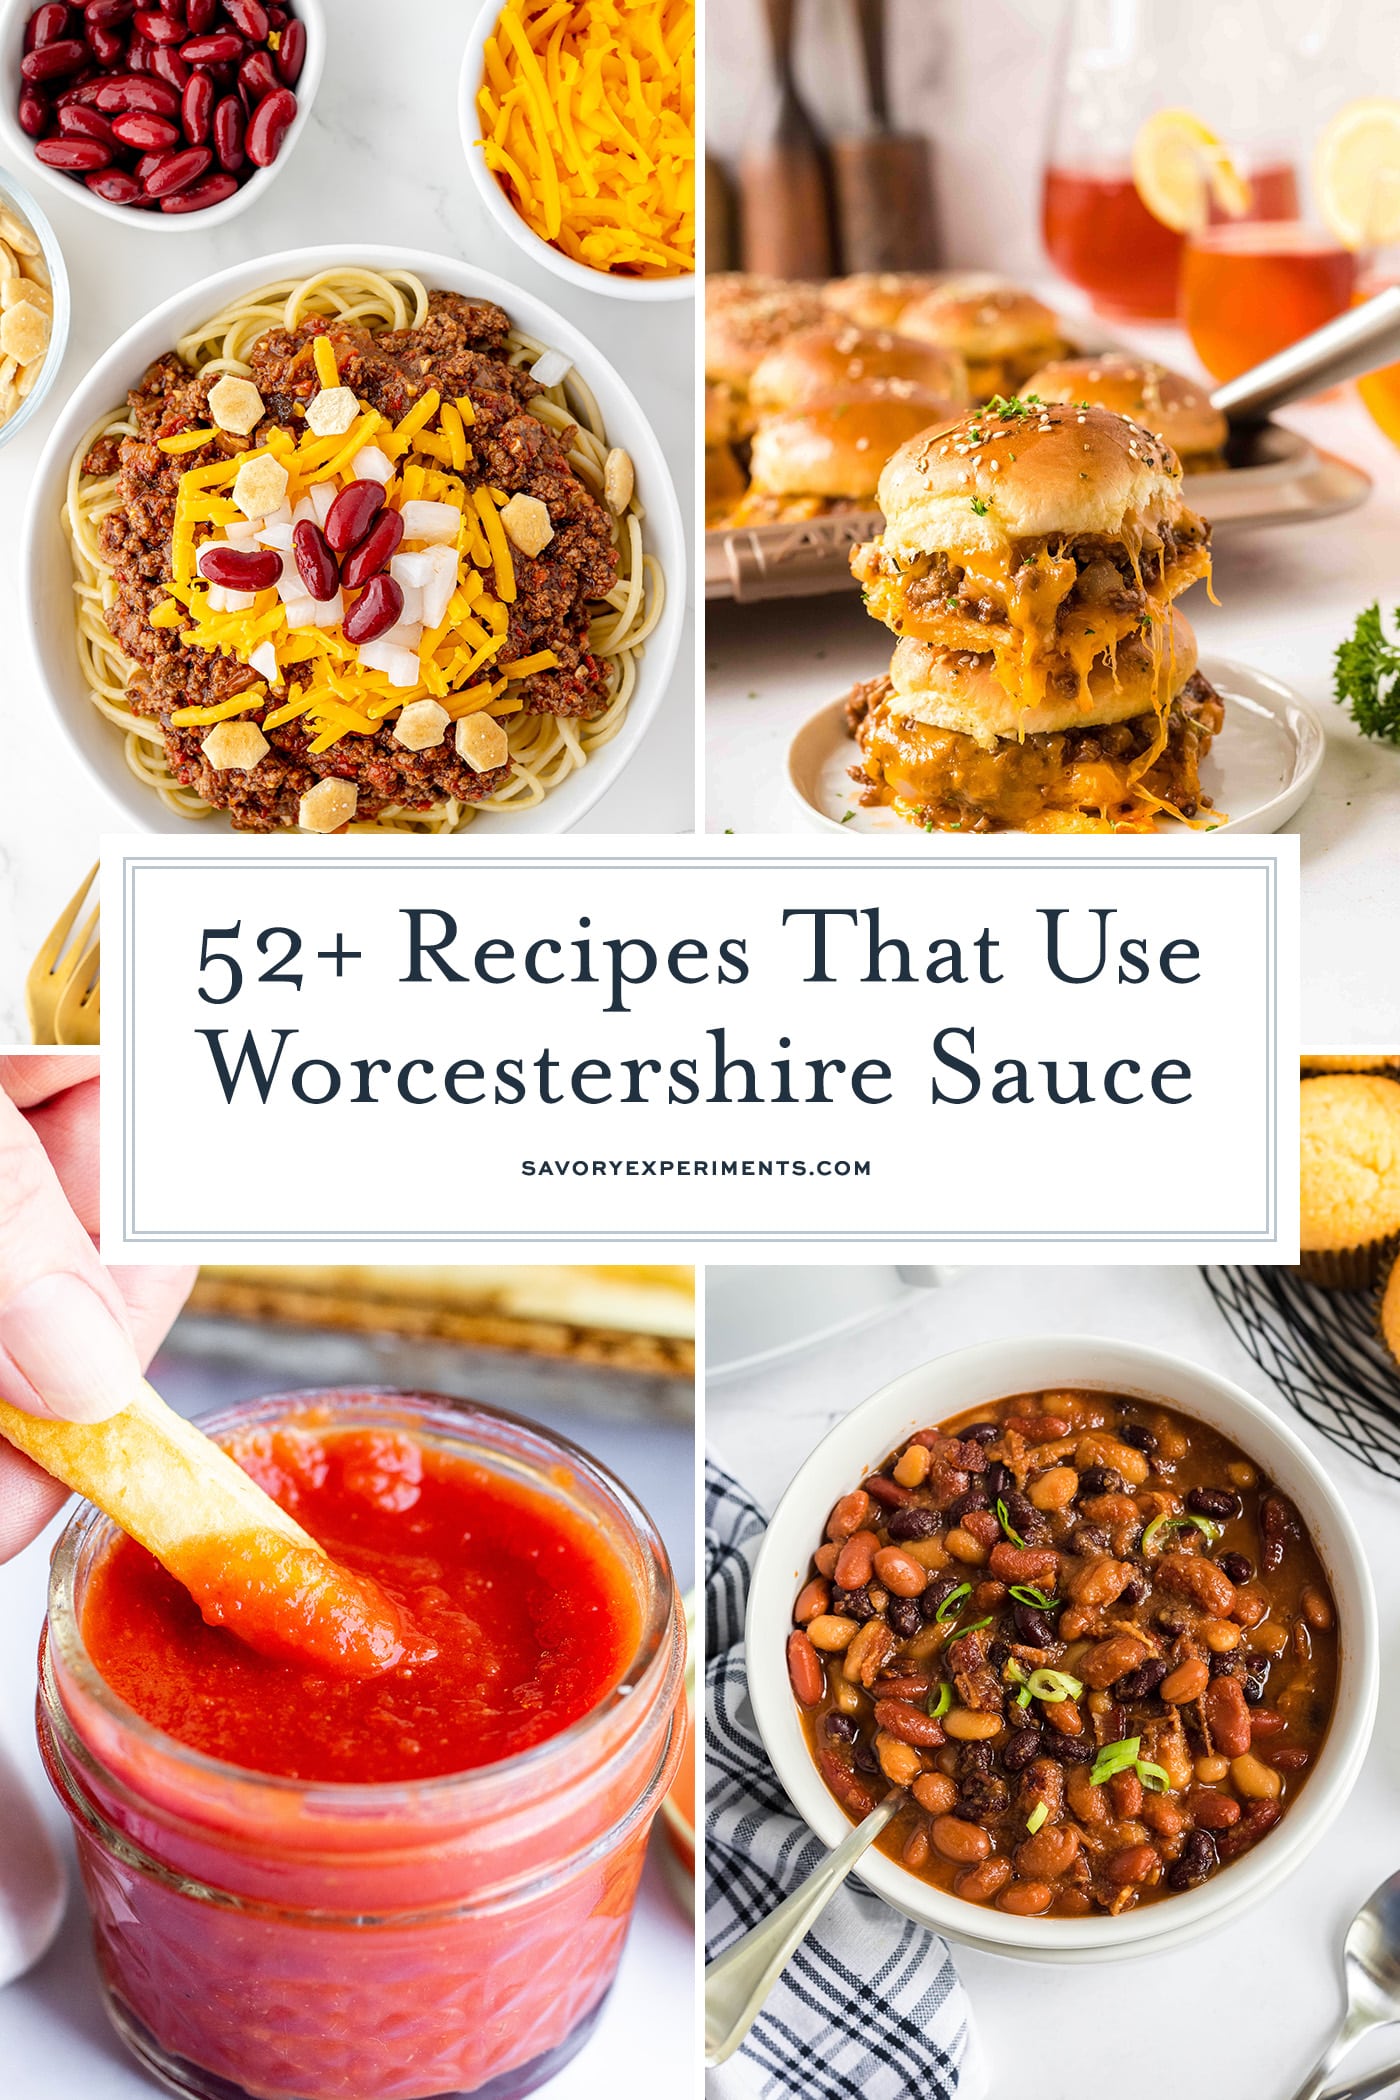 Homemade Worcestershire Sauce Recipe